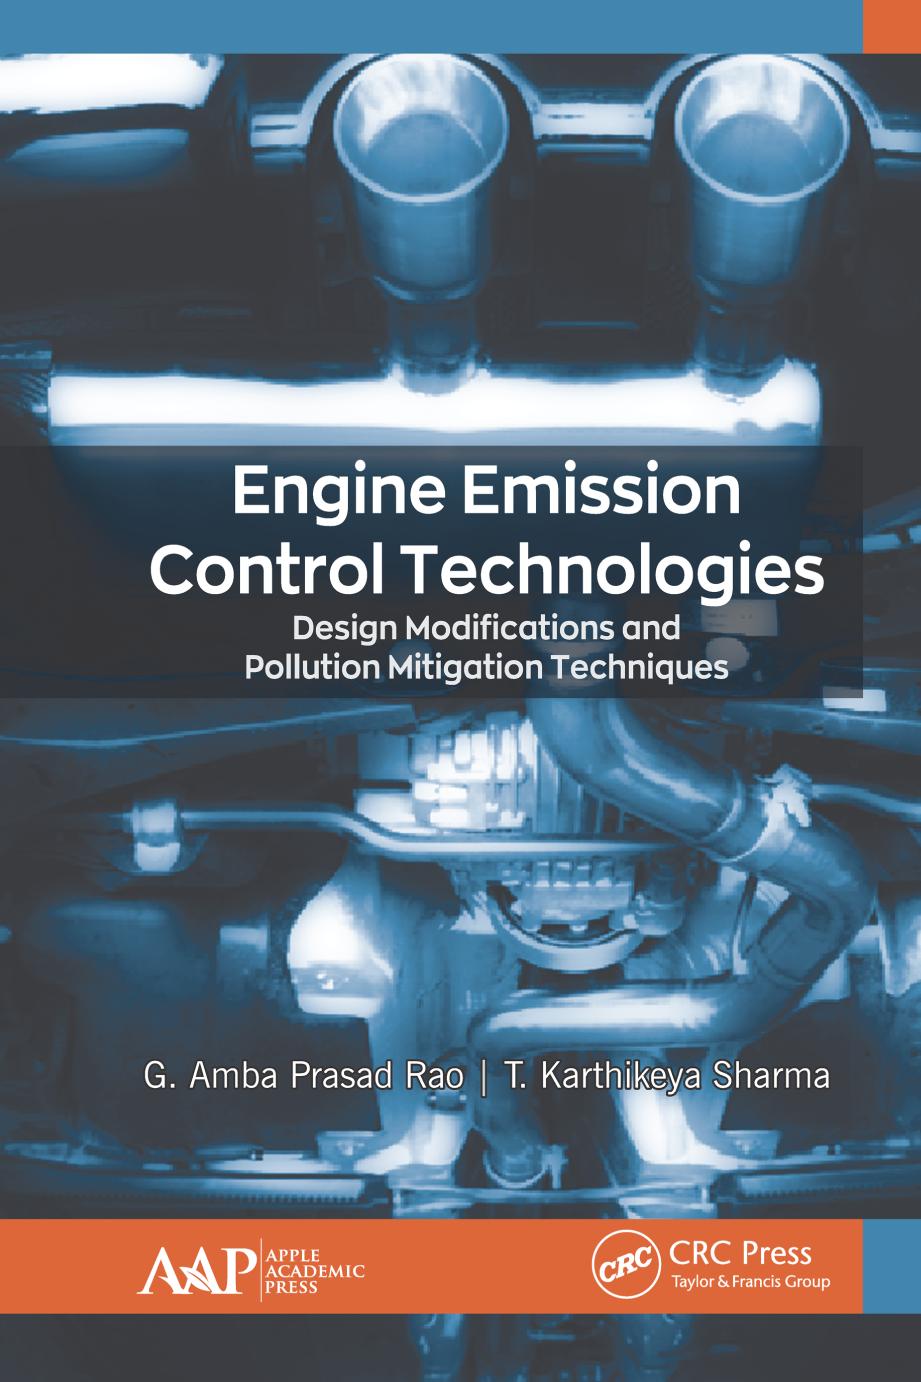 Engine emission control technologies design modifications and pollution mitigation techniques